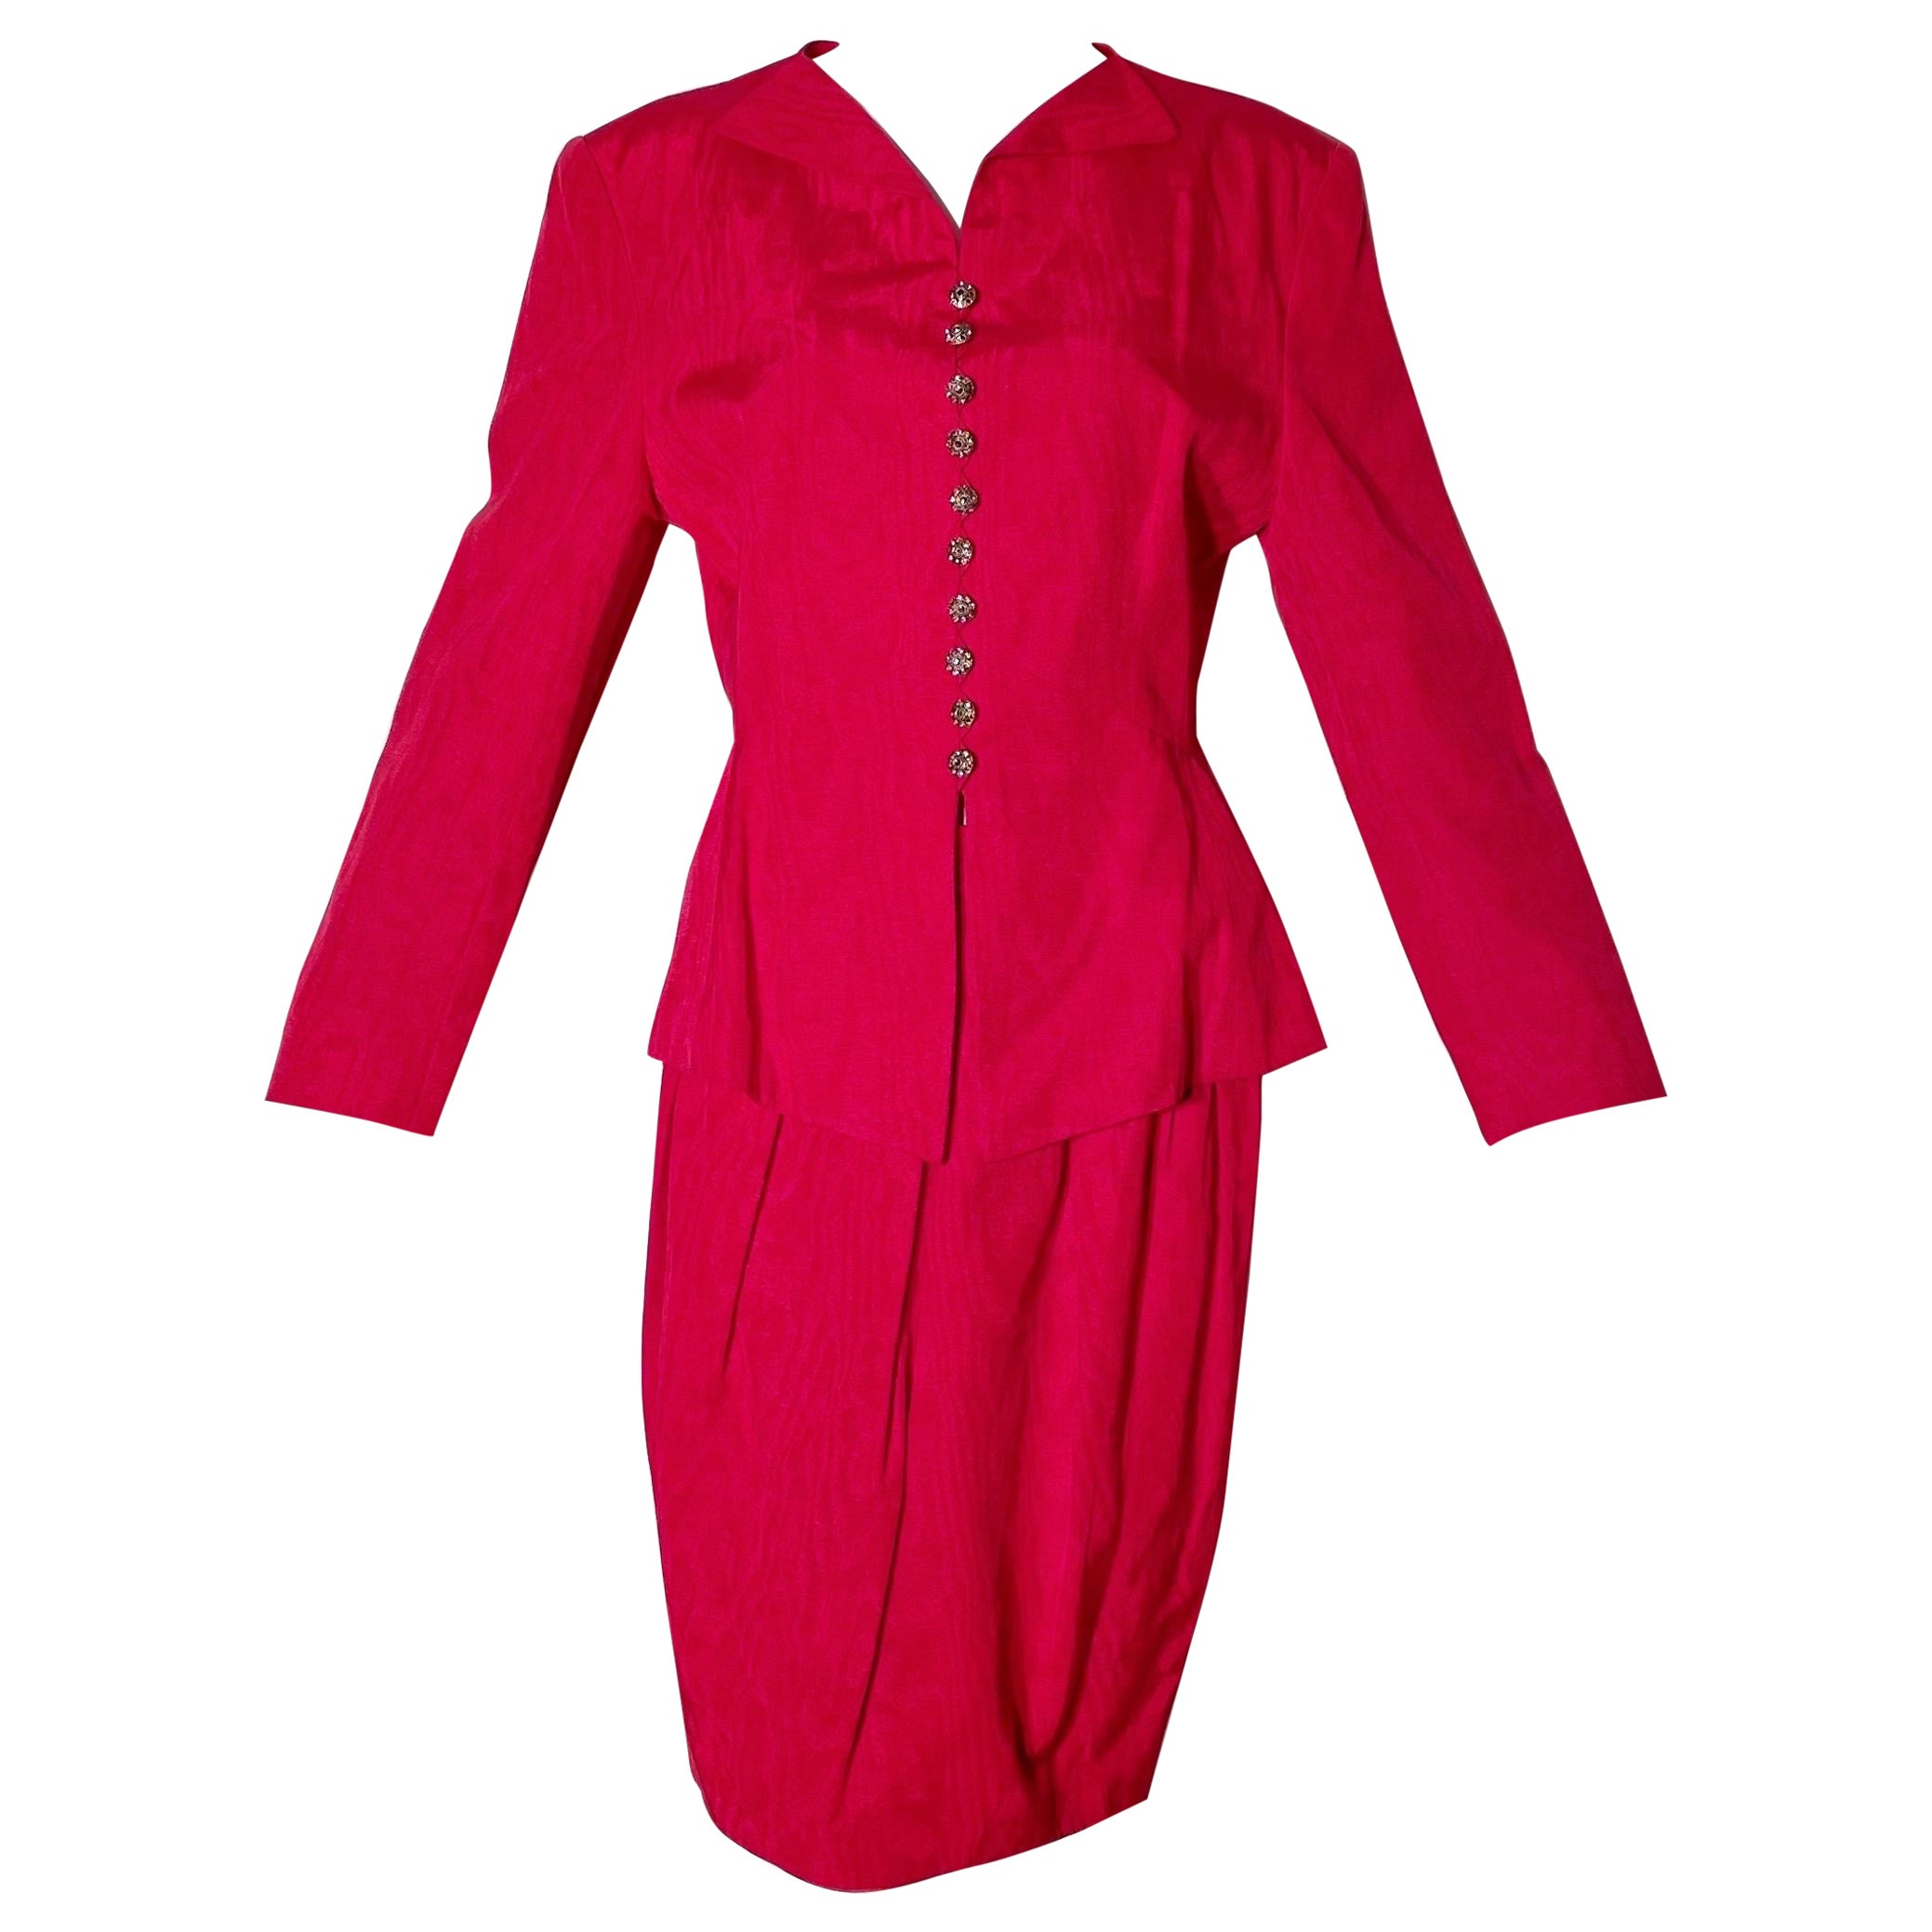 Guy LaRoche Red Skirt Suit For Sale